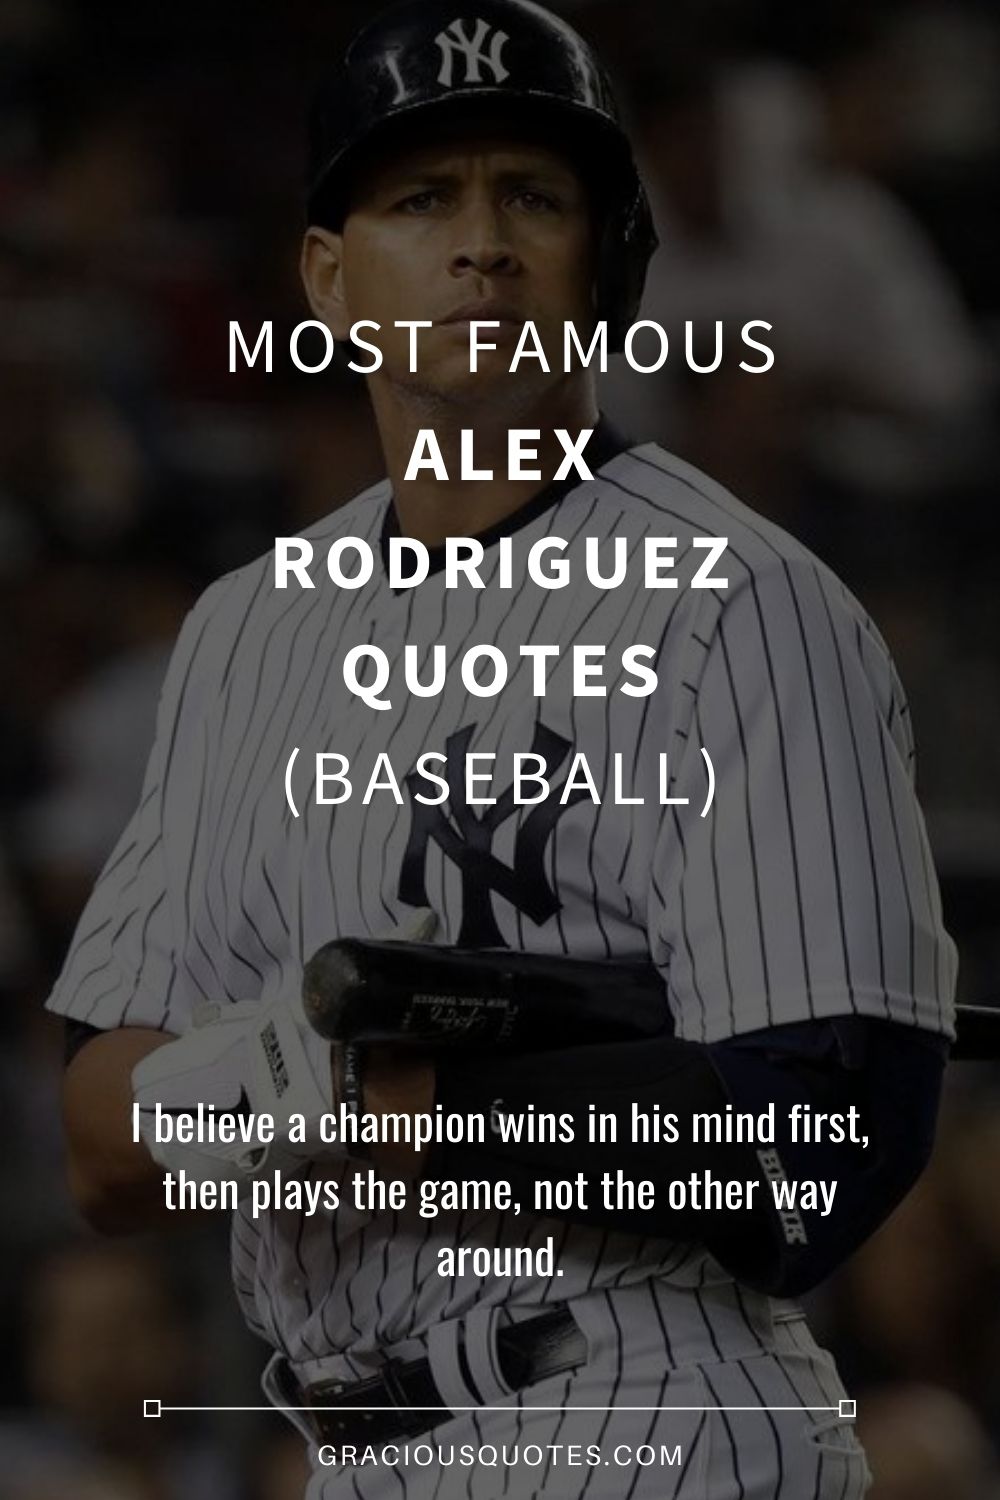 Most Famous Alex Rodriguez Quotes (BASEBALL) - Gracious Quotes